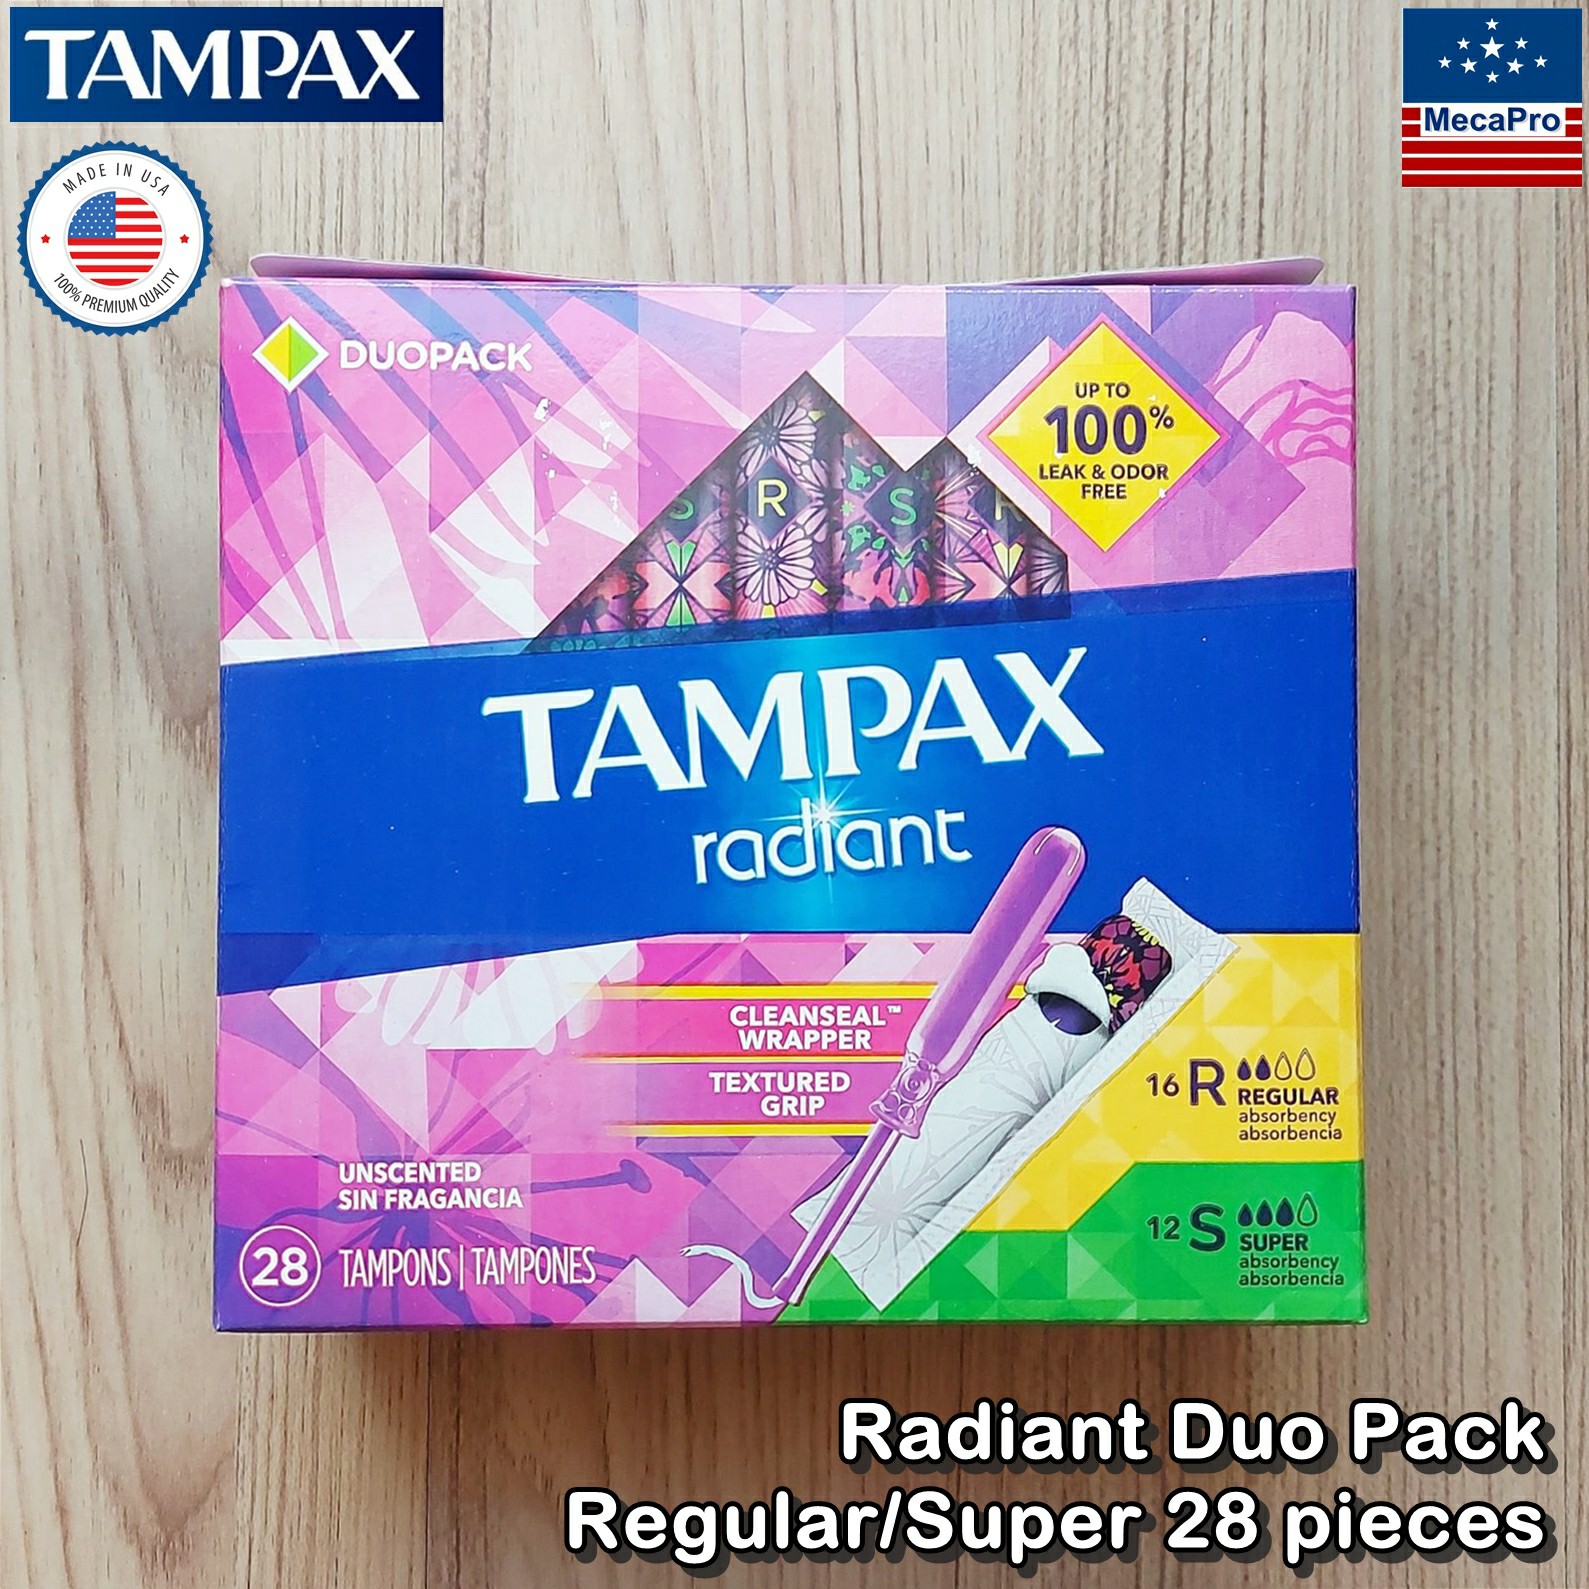 Tampax® Radiant Duo Pack Regular/Super 28 pieces ผ้าอนามัยแบบสอด 28 ชิ้น เหมาะกับวันมาปกติ-มามาก ป้องกันการรั่วซึมและปลอดกลิ่น